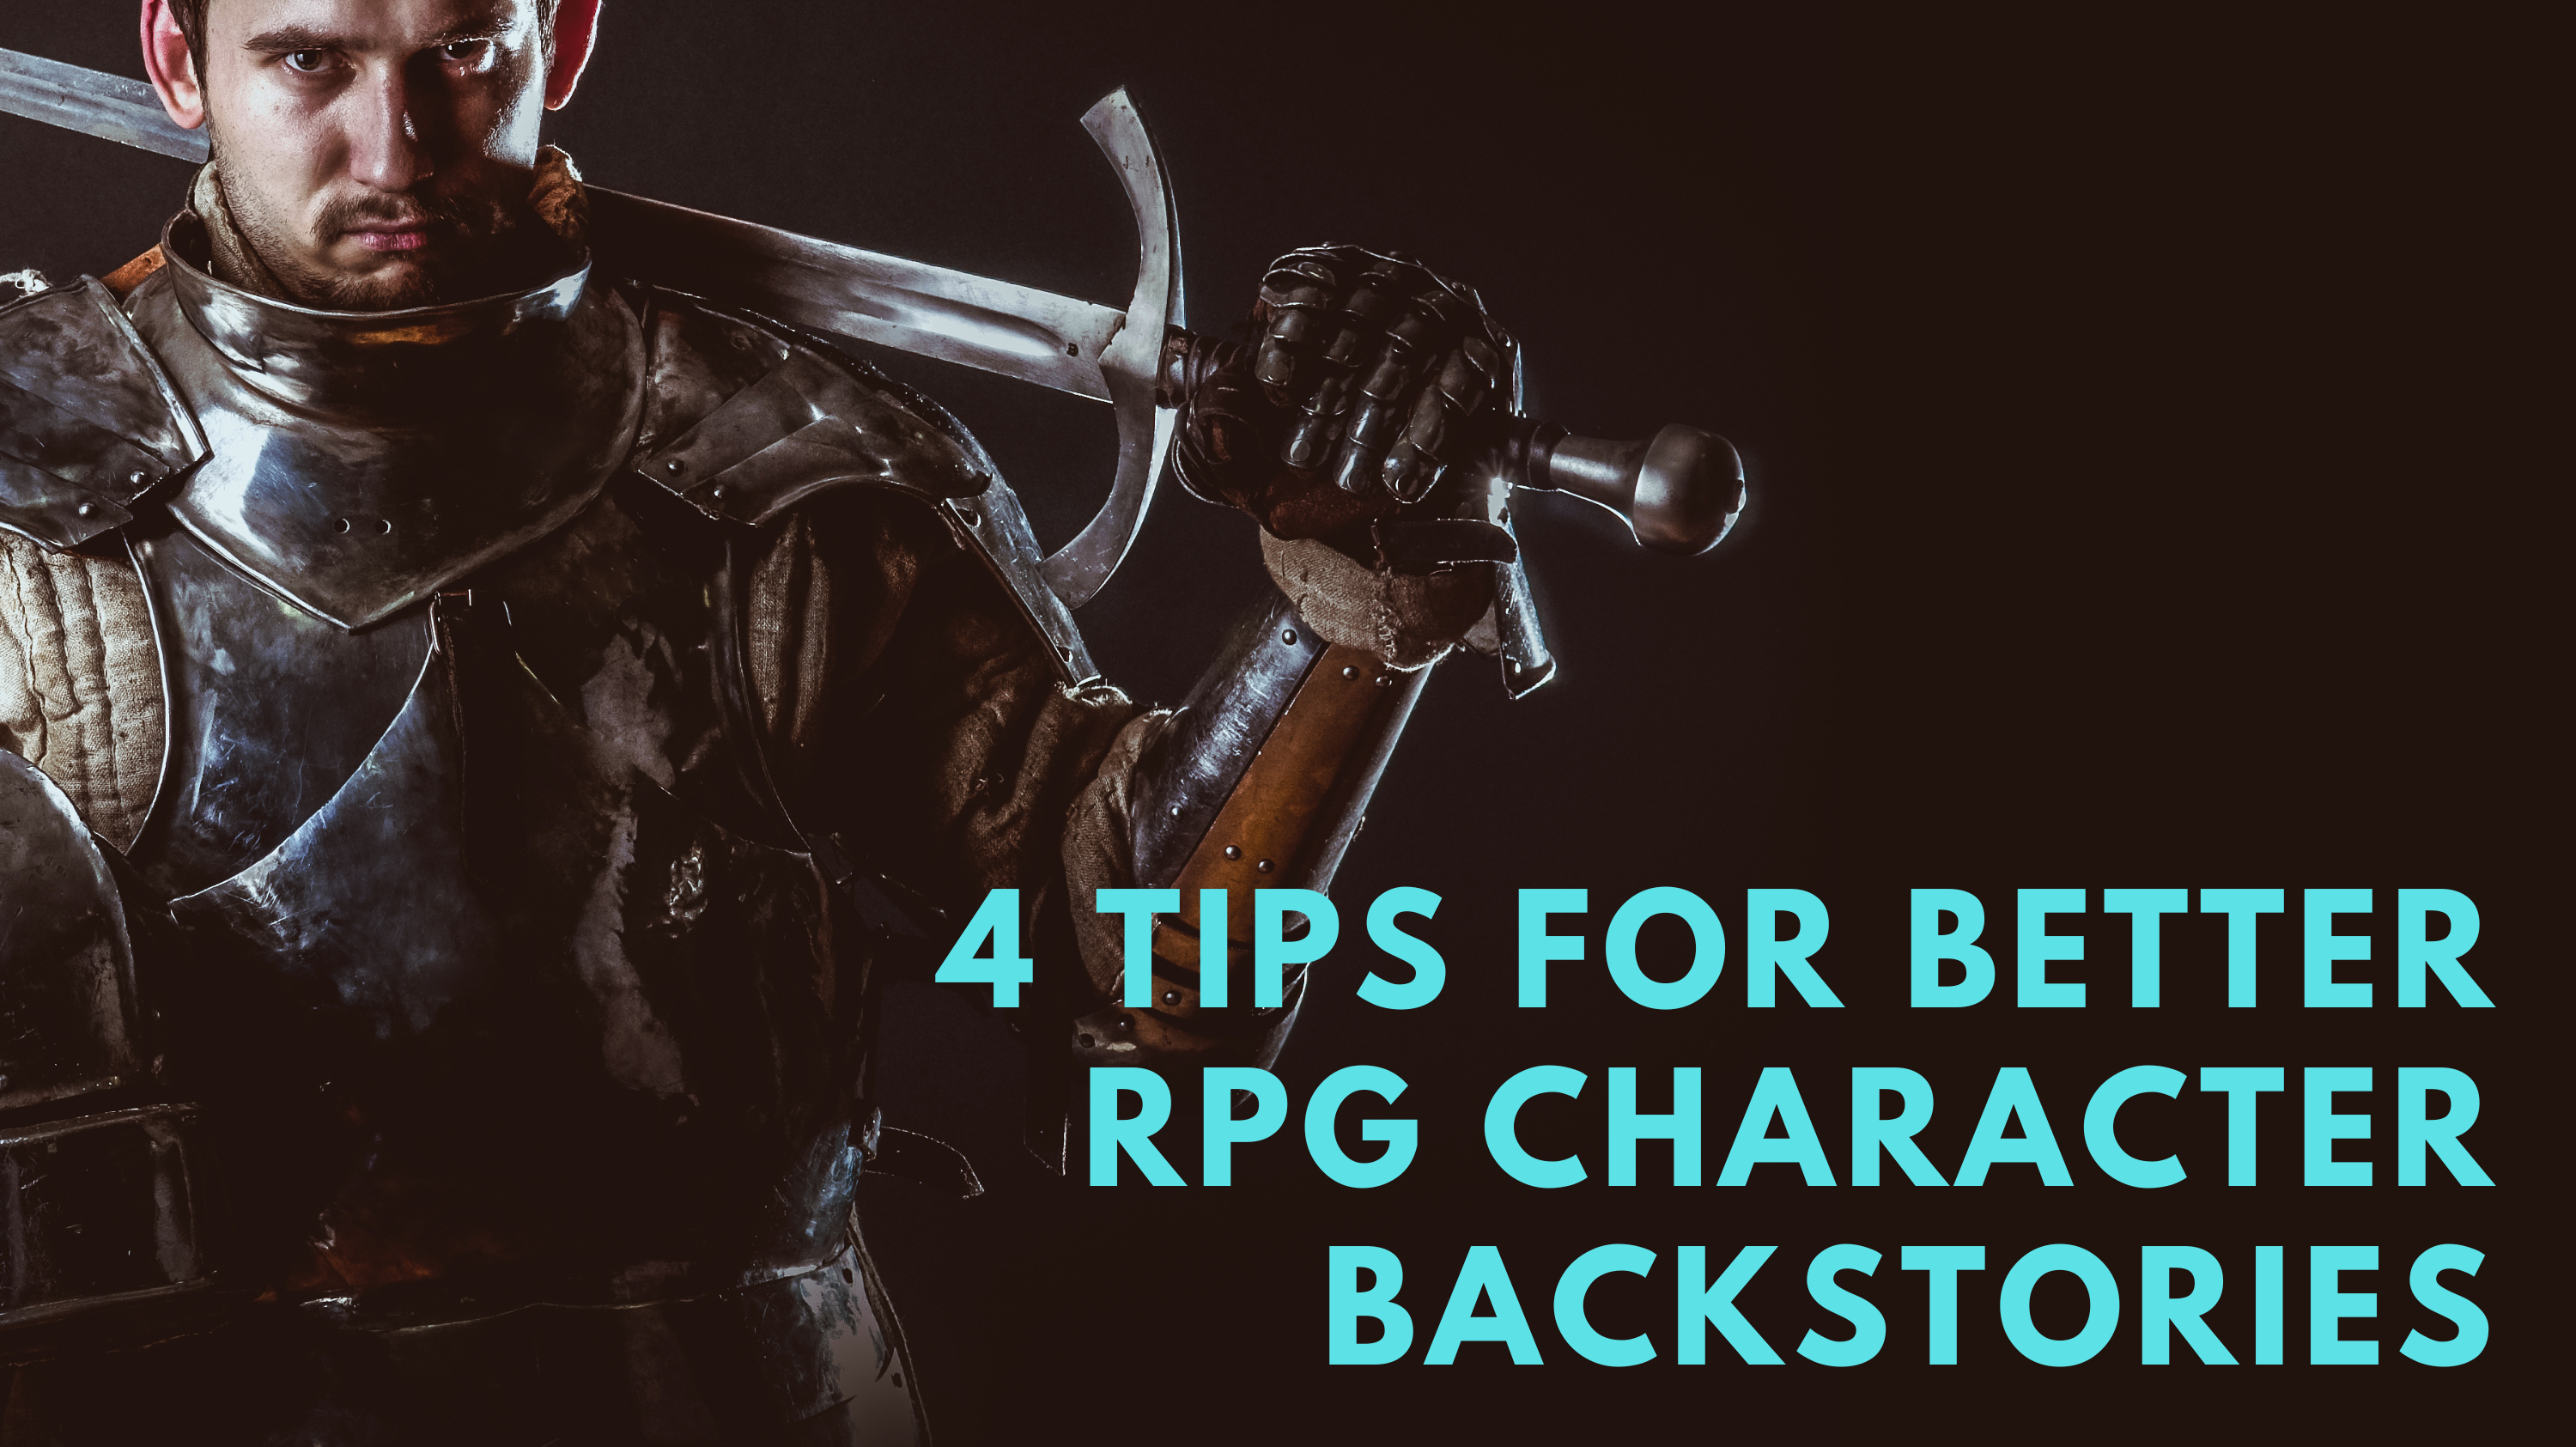 4 tips for better RPG character backstories